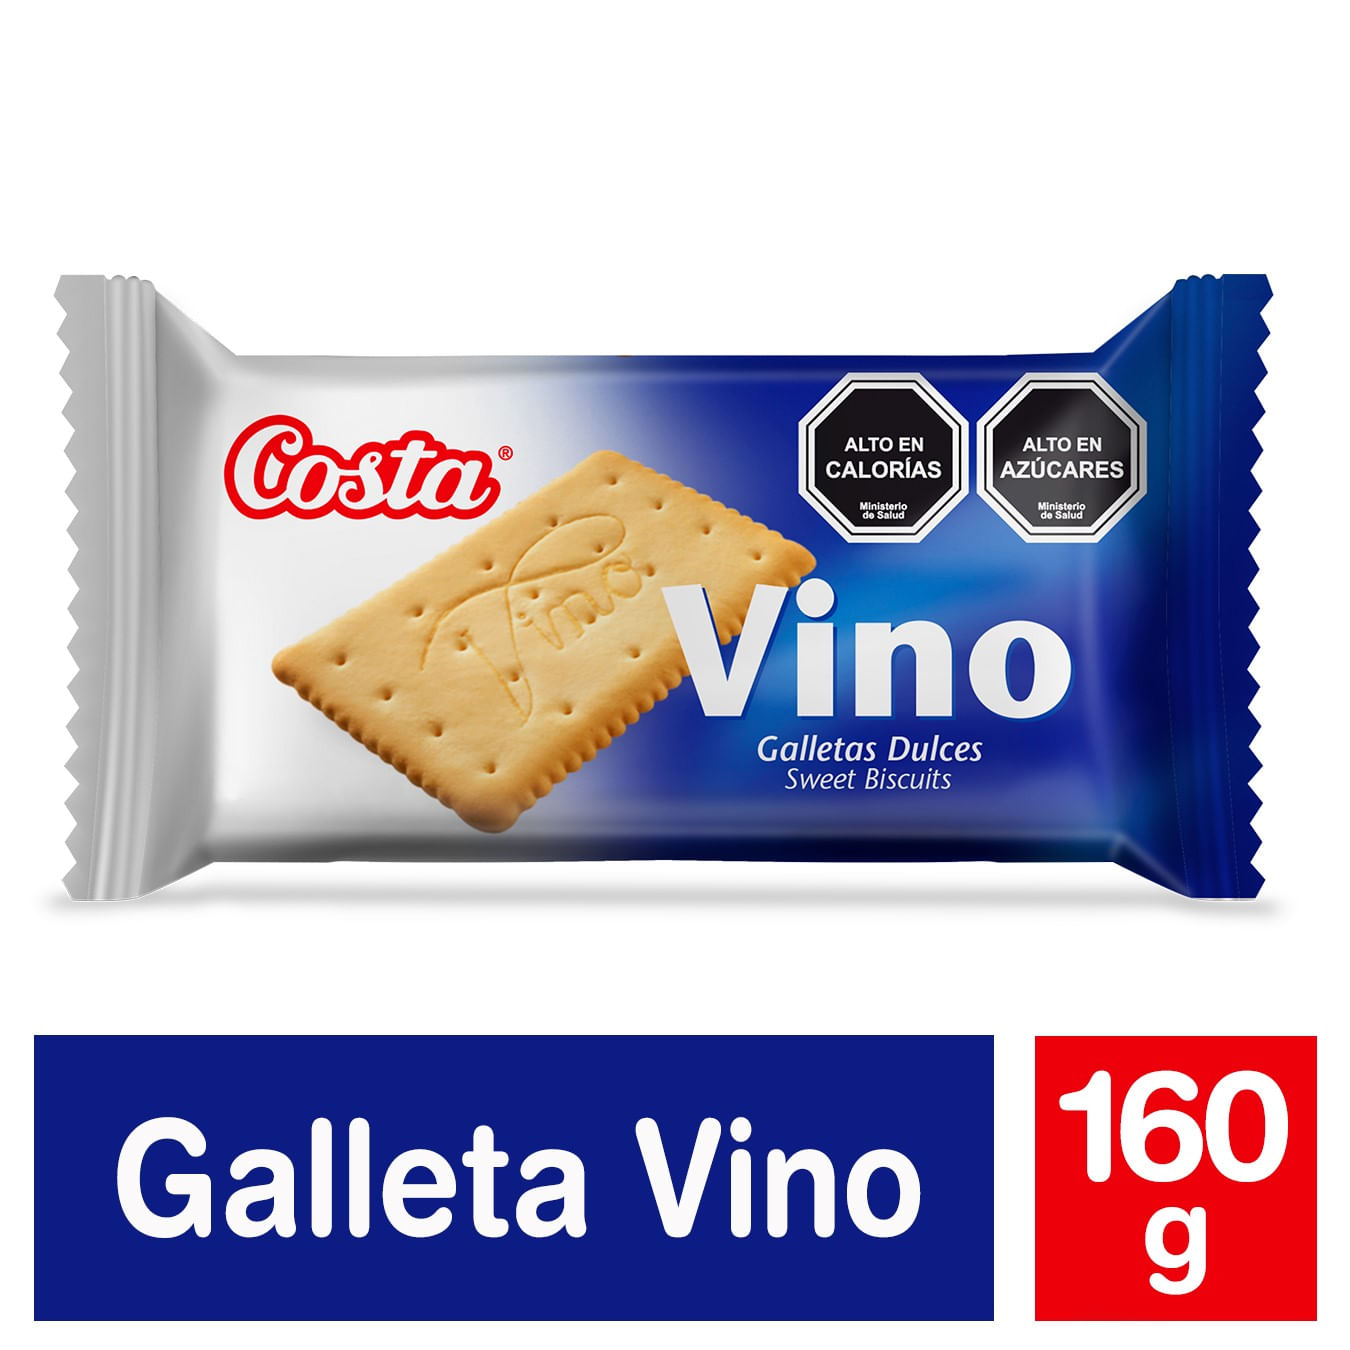 Galletas Costa vino 160 g